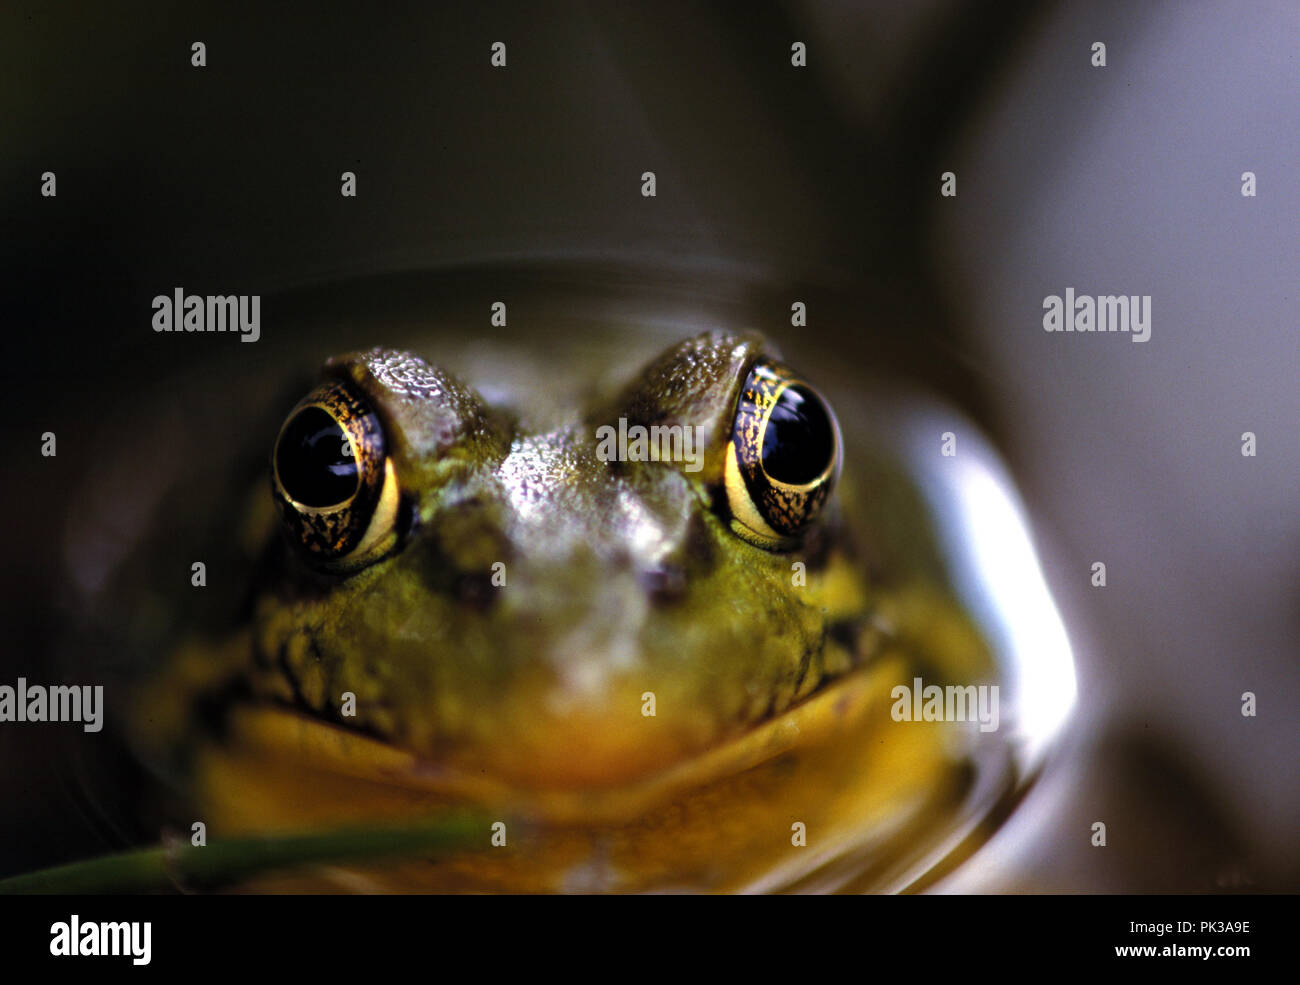 1greenfrog062001 -- Green frog. Stock Photo